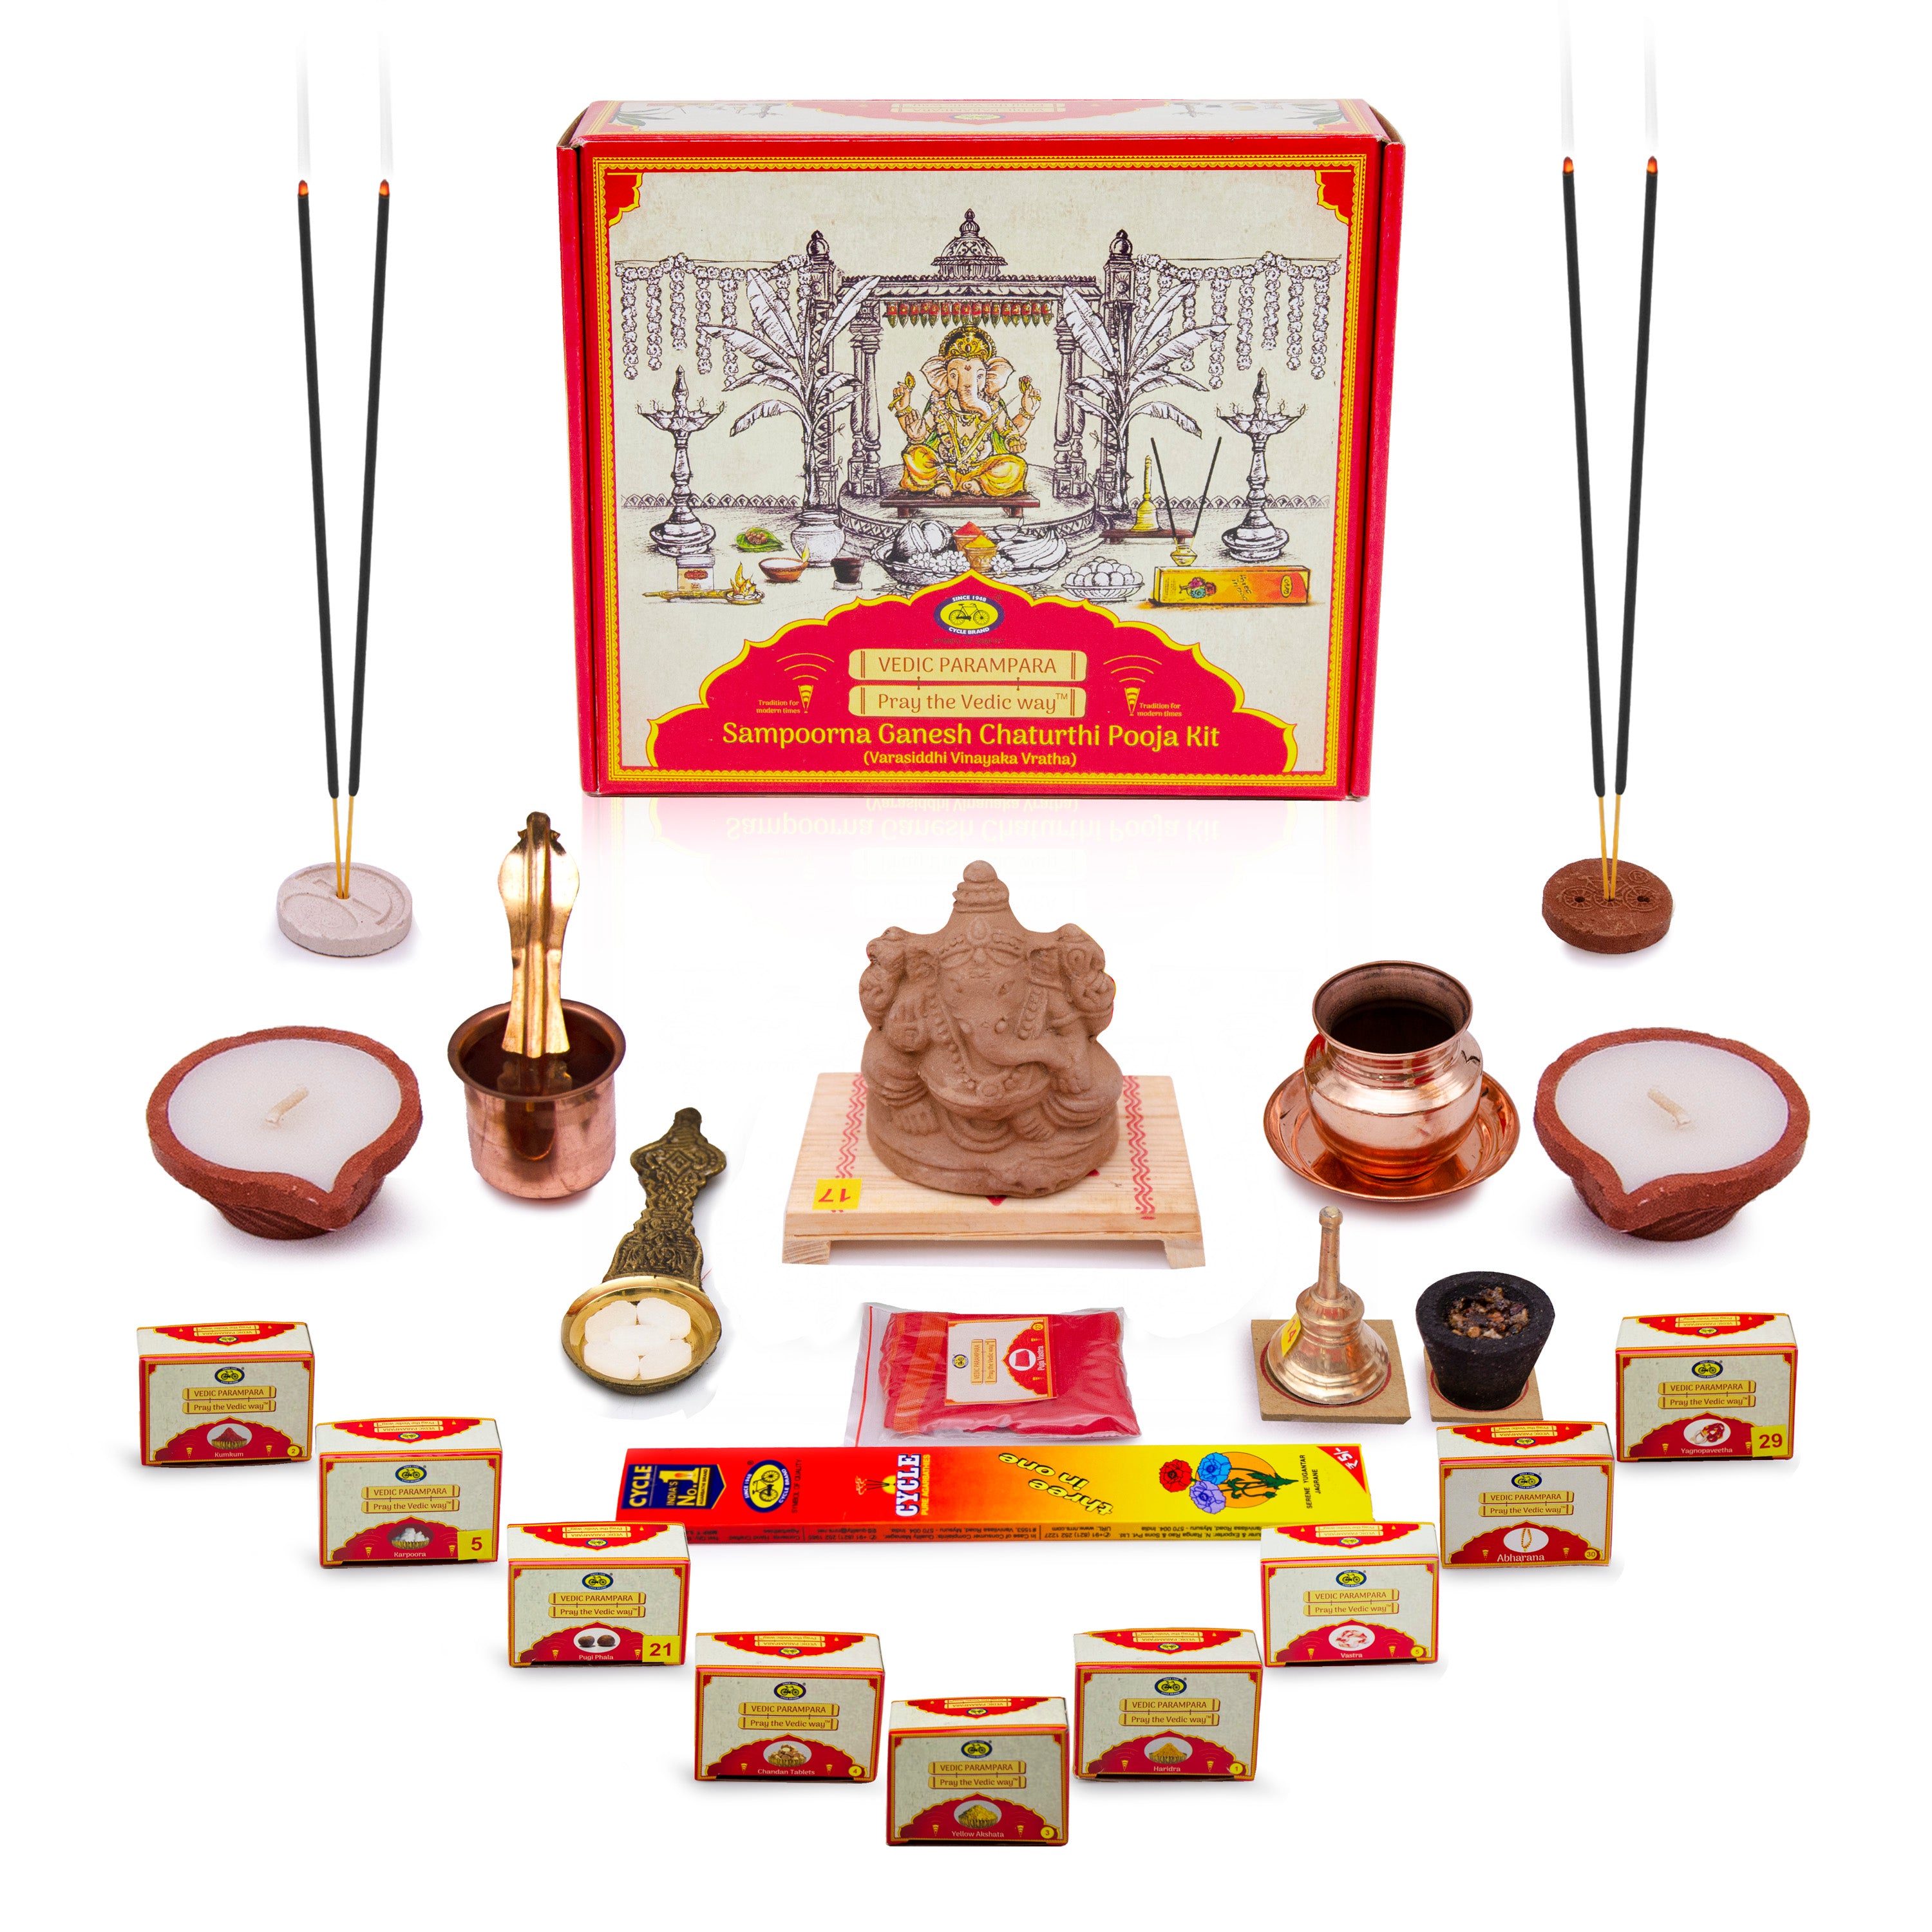 Sampoorna Ganesha Chaturthi Pooja Kit